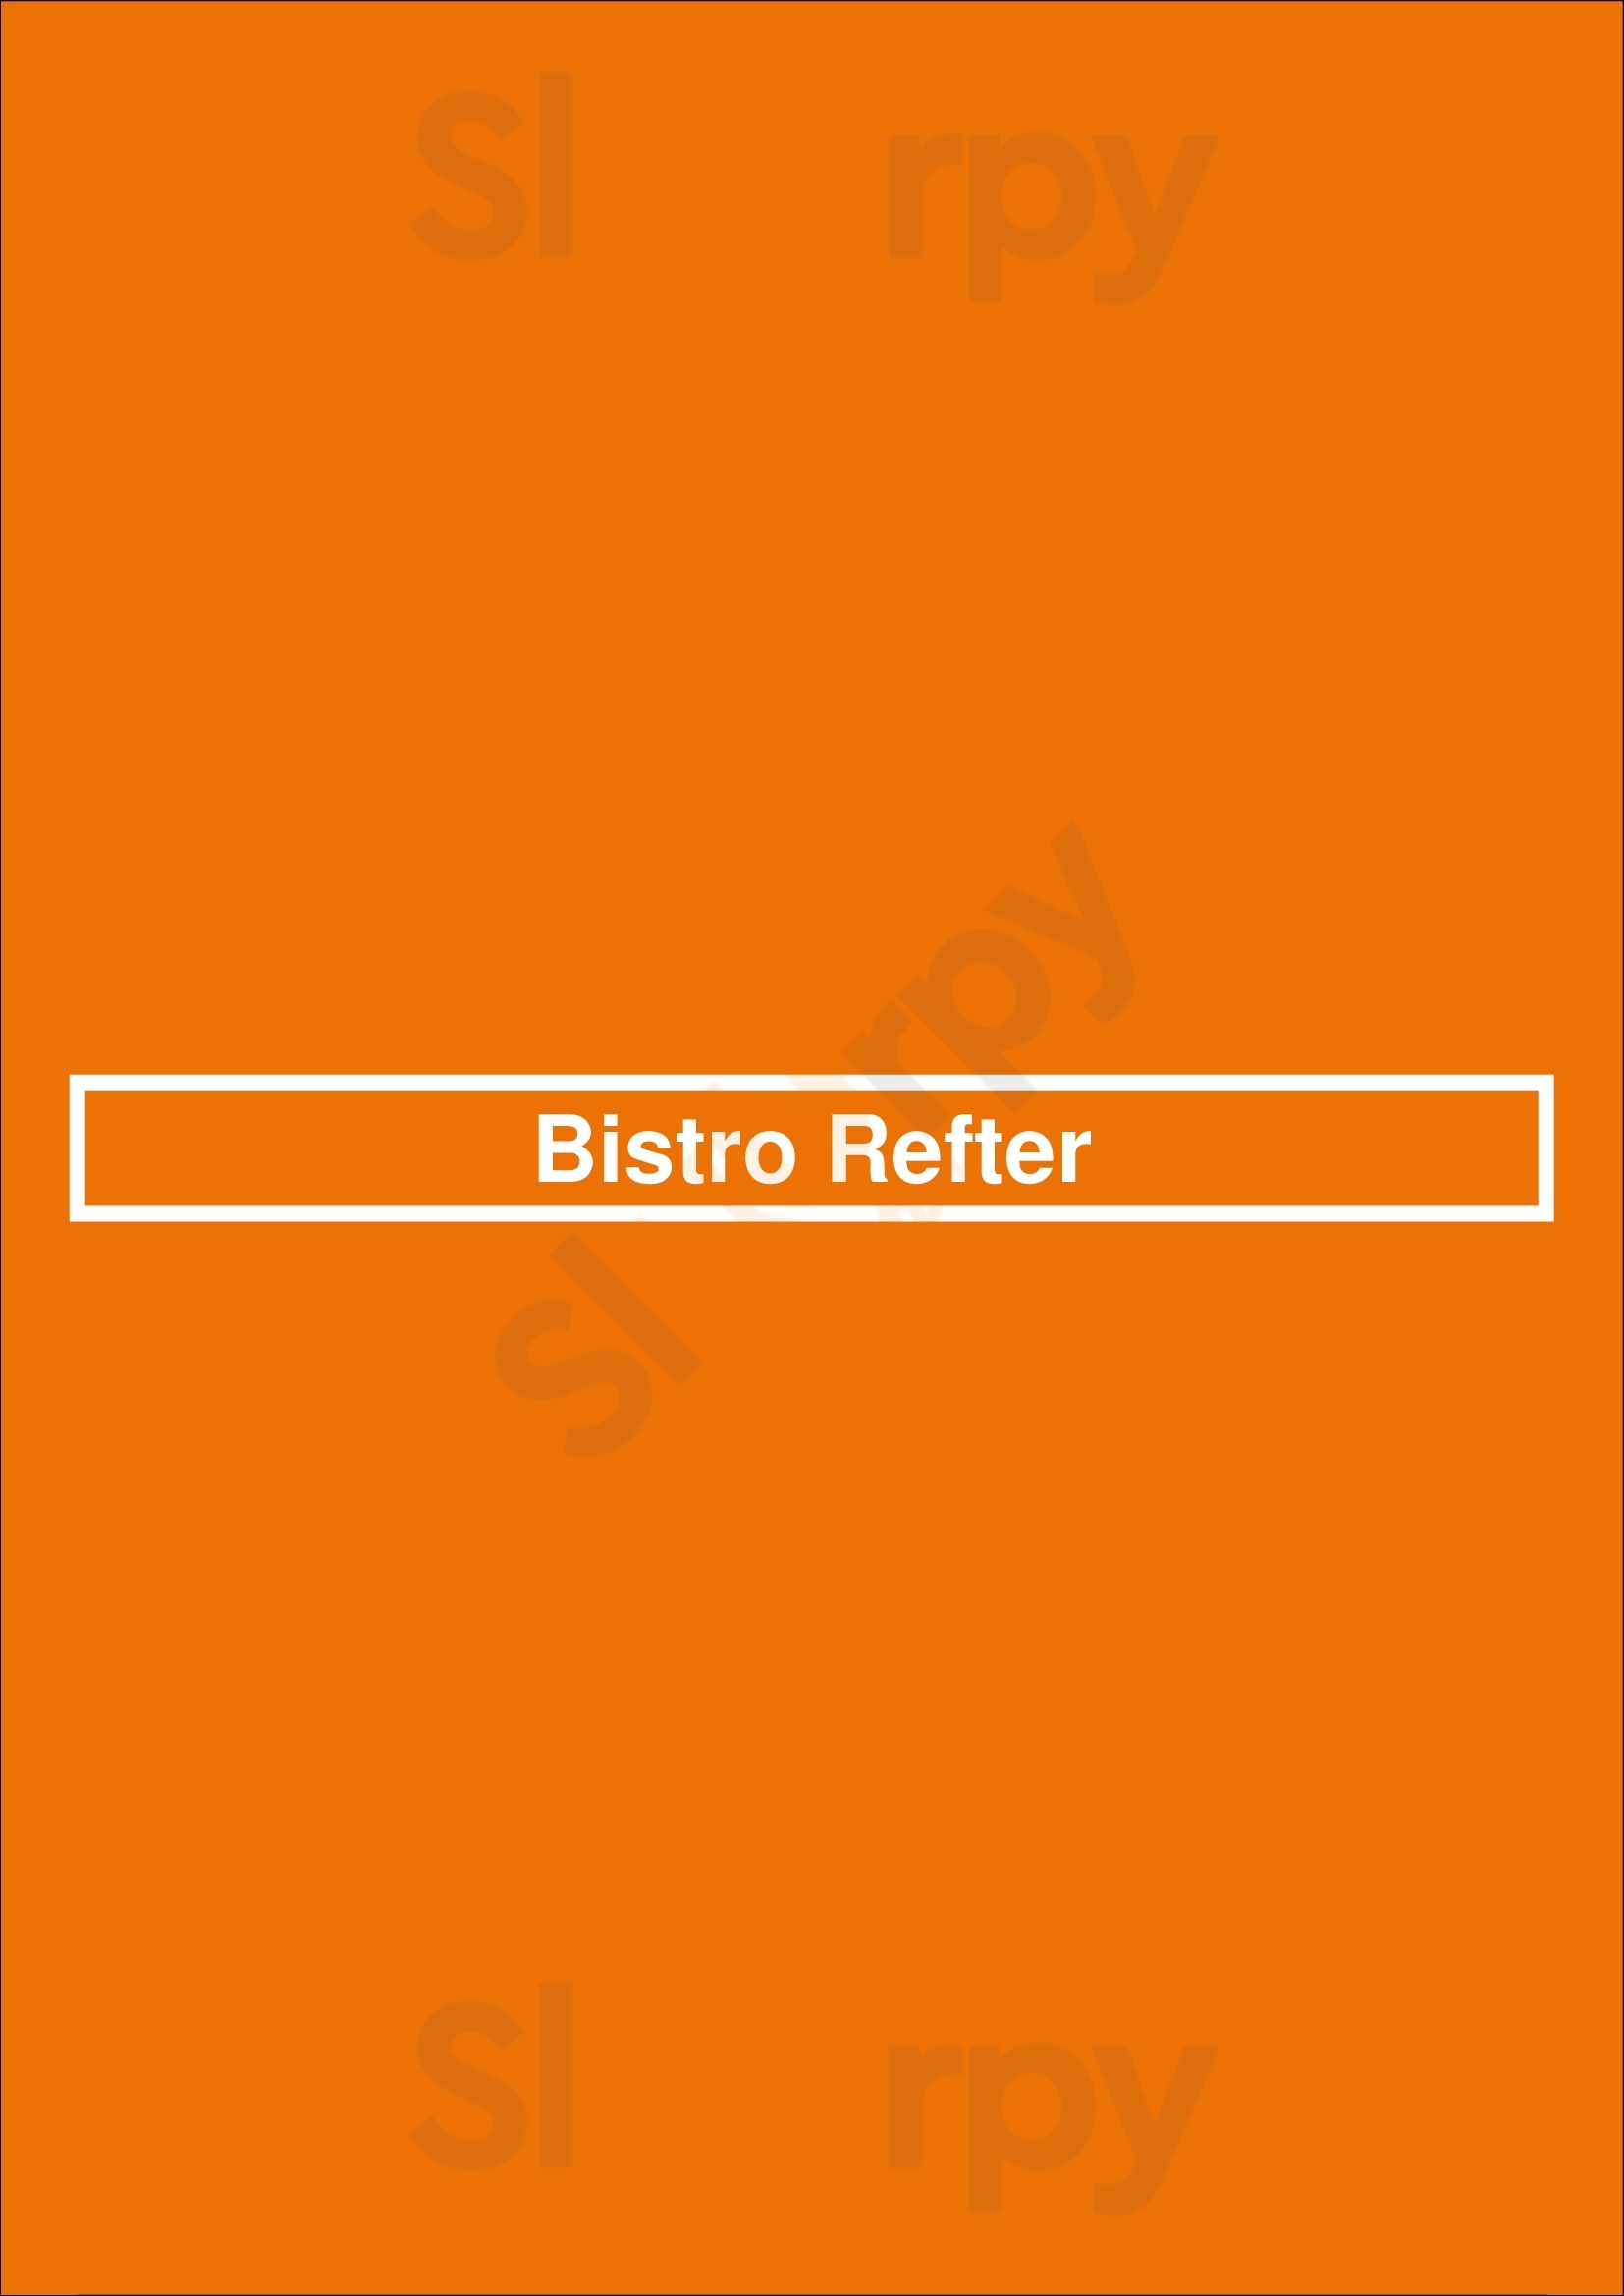 Bistro Refter Winsum Menu - 1